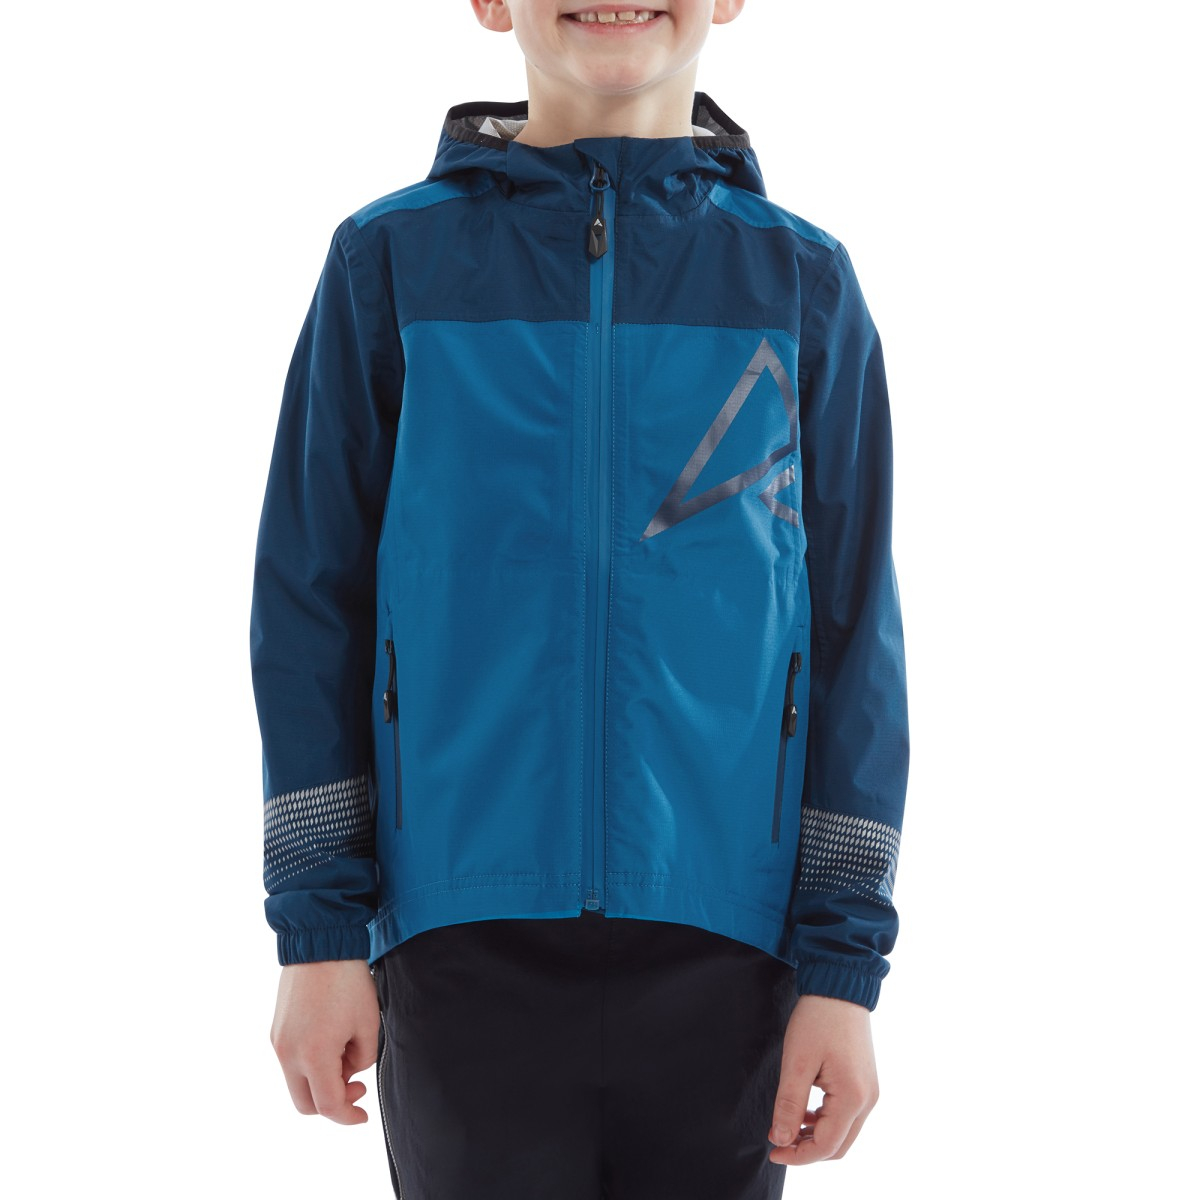 Altura  Spark Kids Waterproof Cycling Jacket 5 to 6 Years BLUE